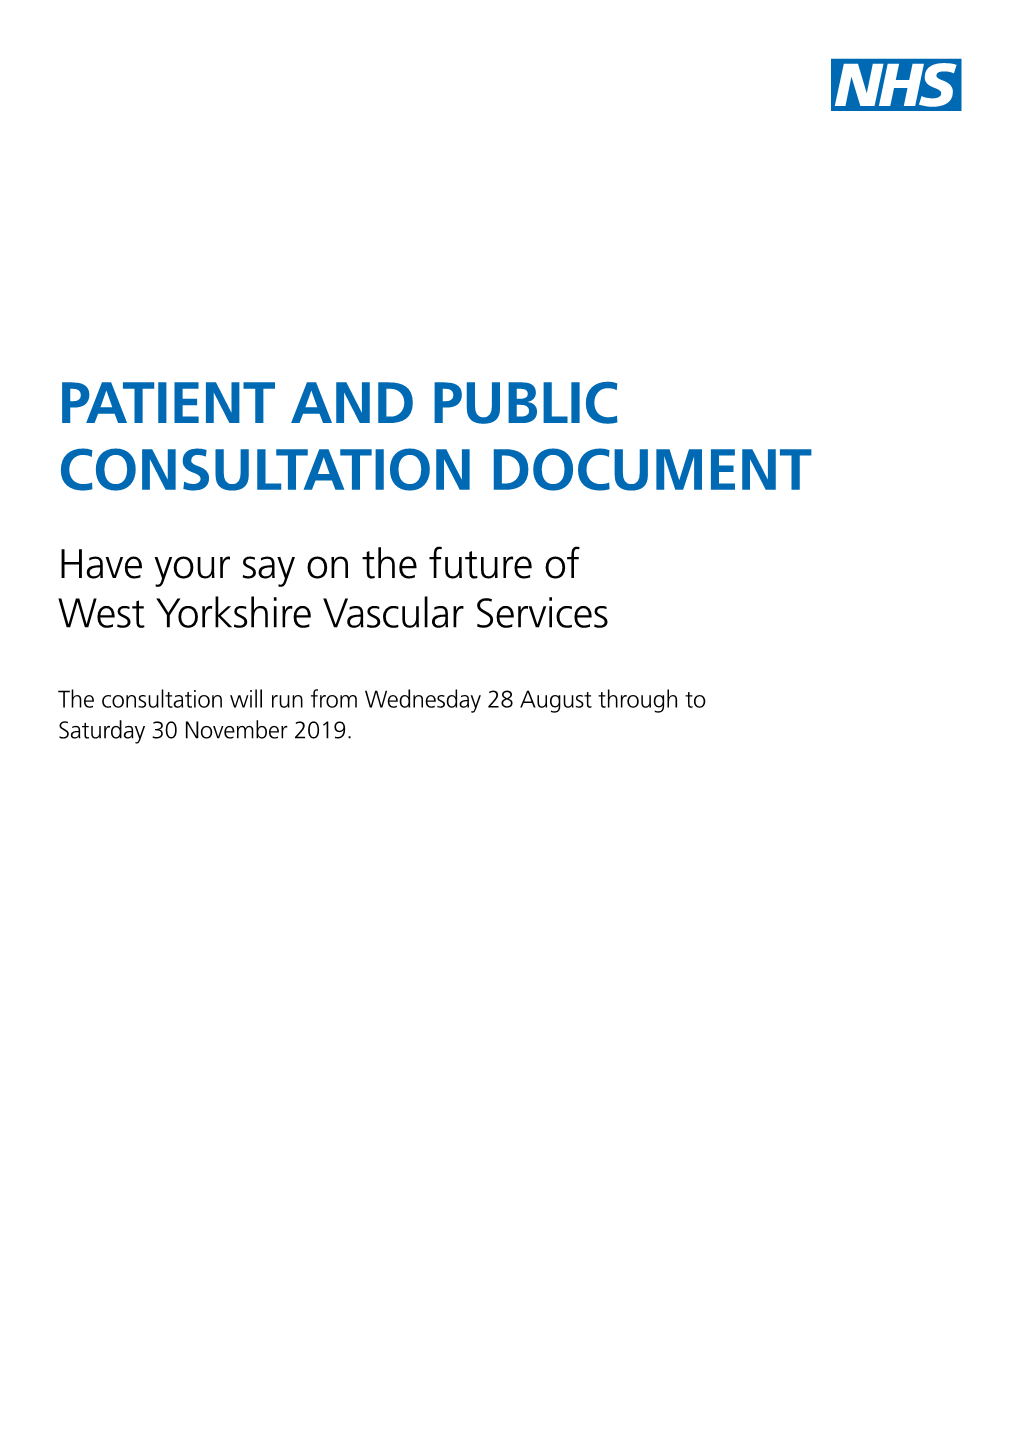 Patient and Public Consultation Document